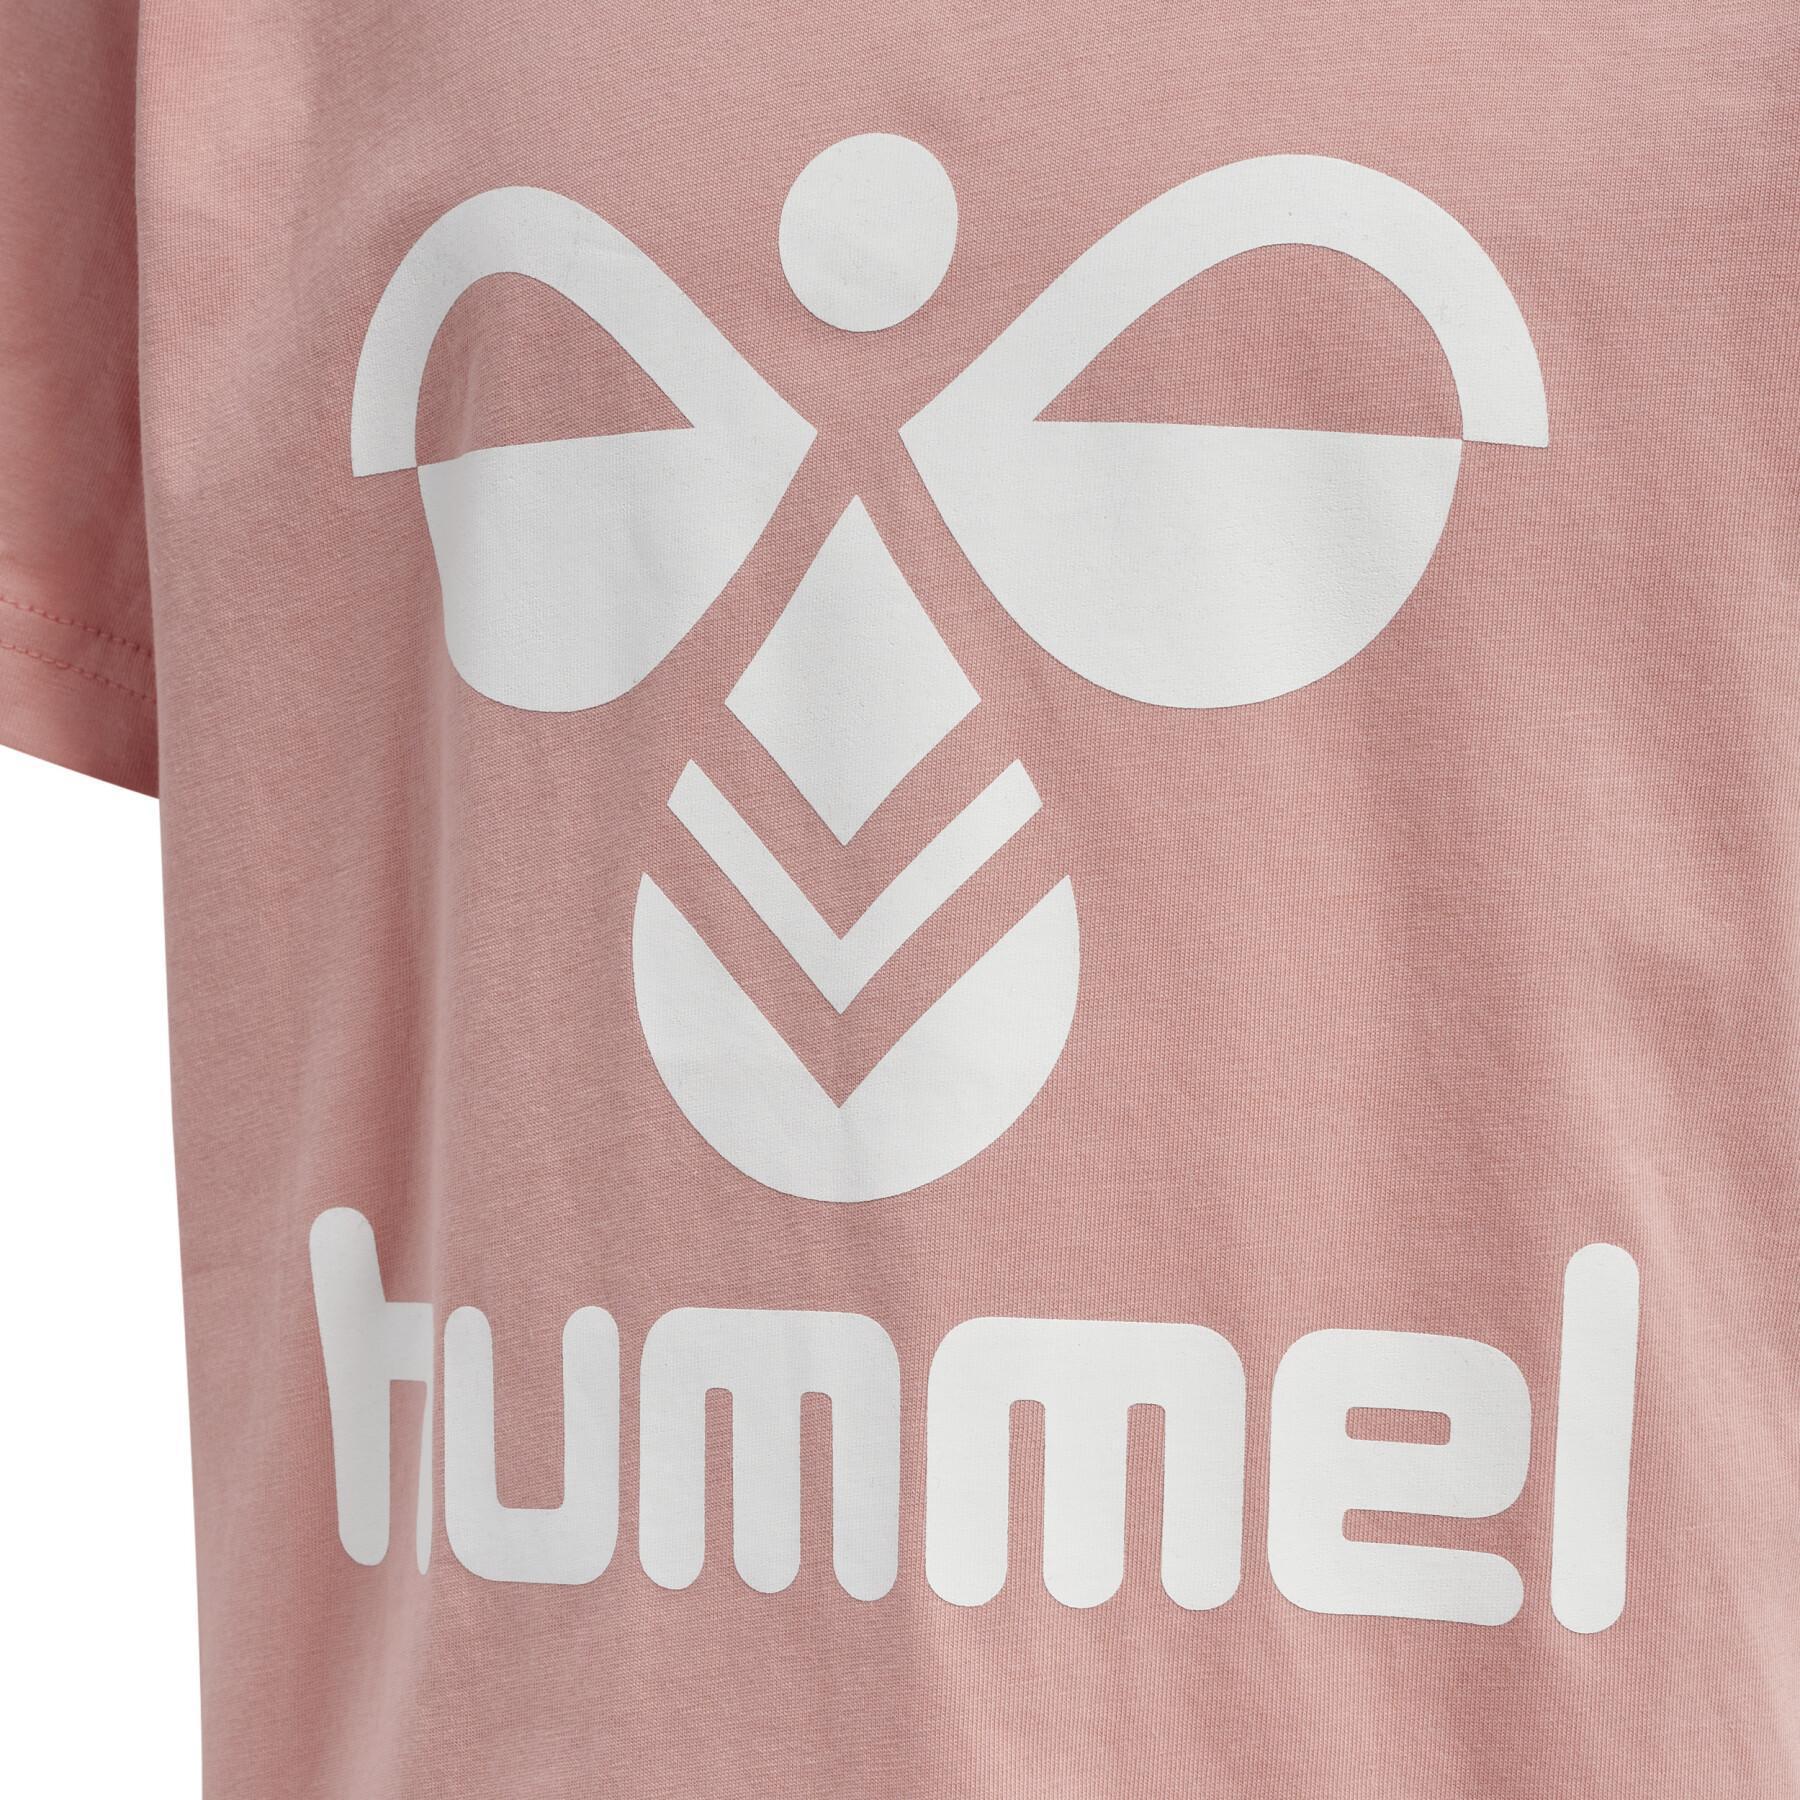 Camiseta de chica Hummel Tres